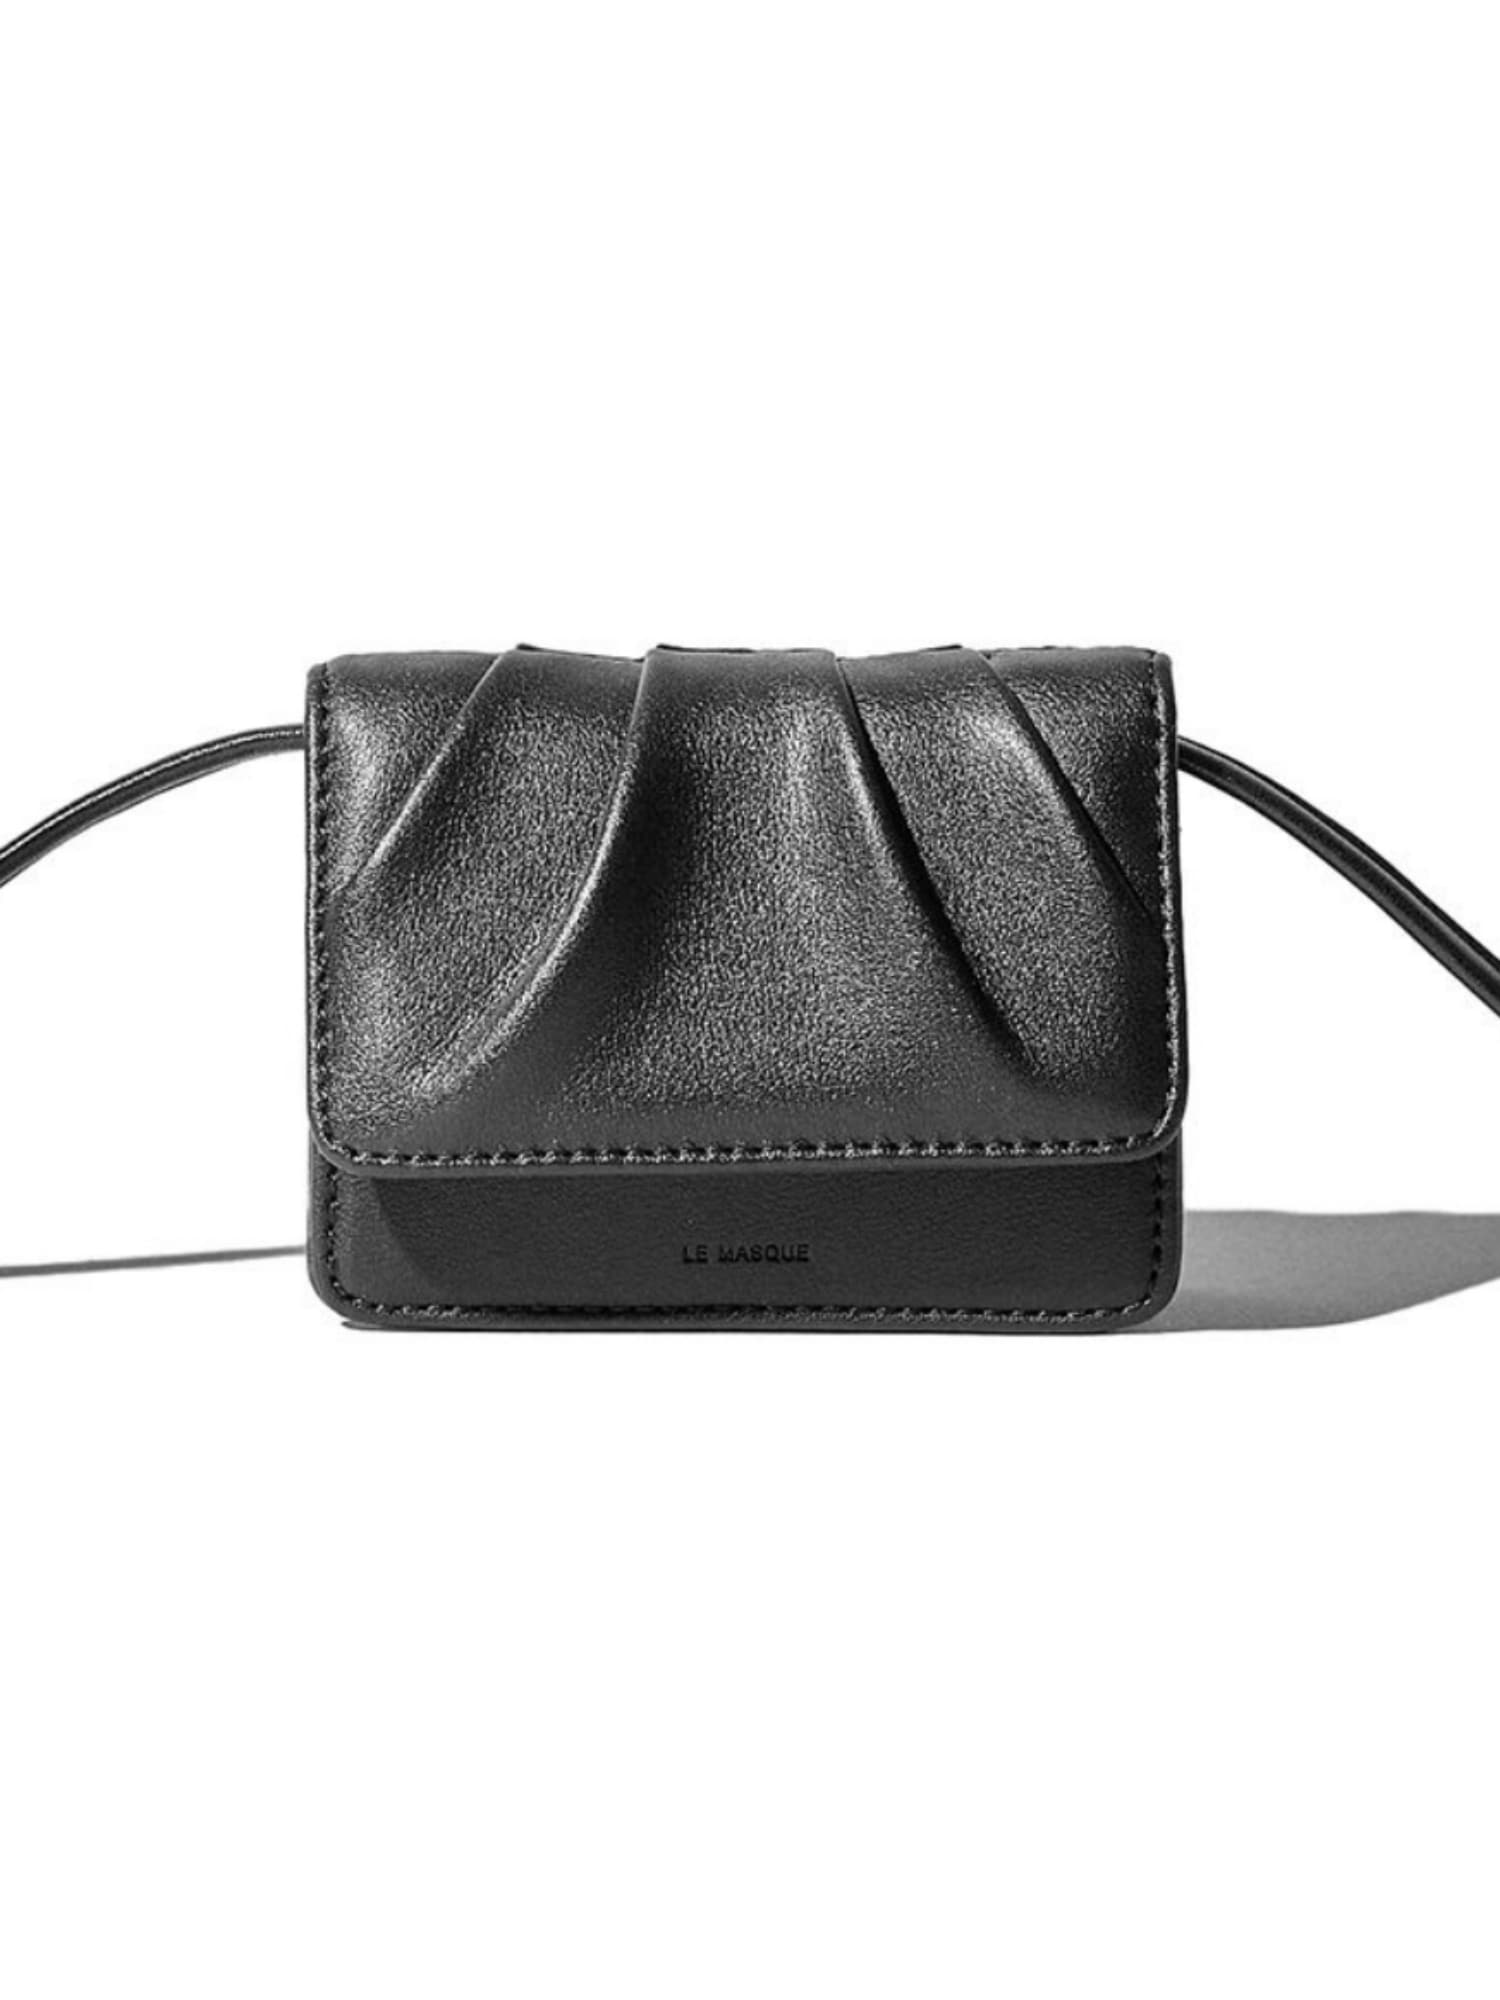 DOUGH Micro Bag &amp; Airpods Card Wallets black